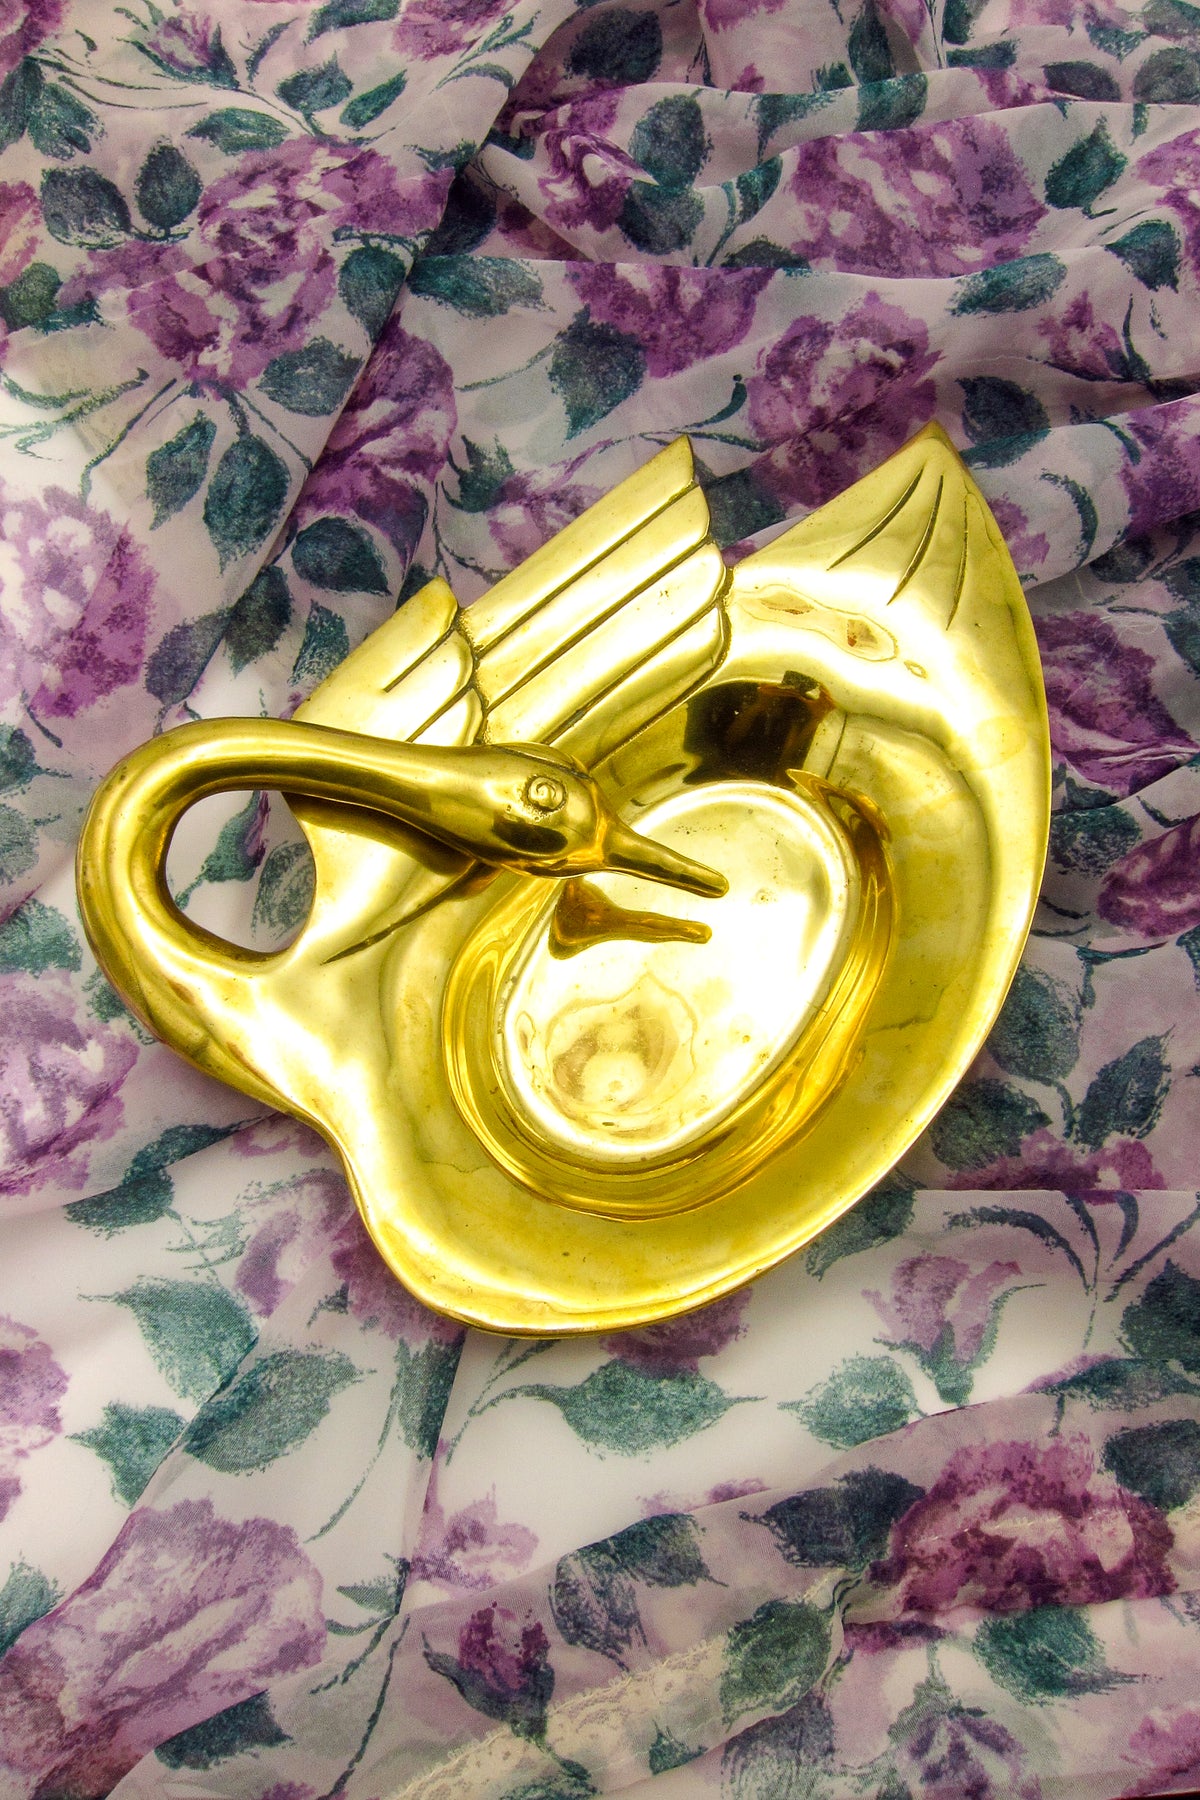 Brass Swan Dish by Dolbi Cashier